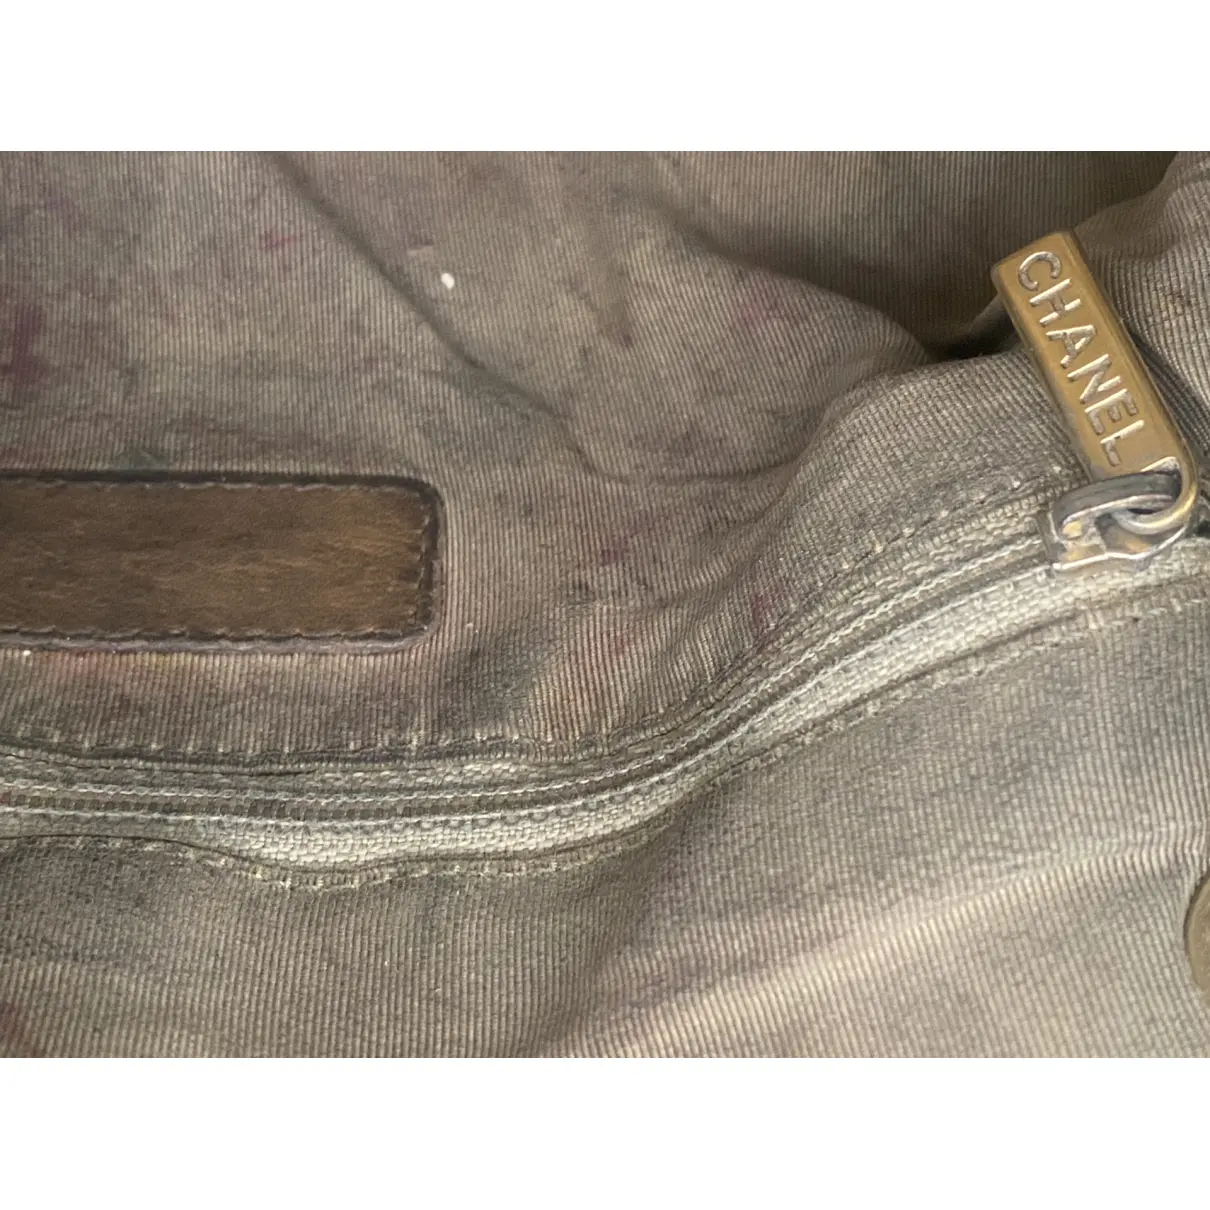 Wild Stitch leather handbag Chanel